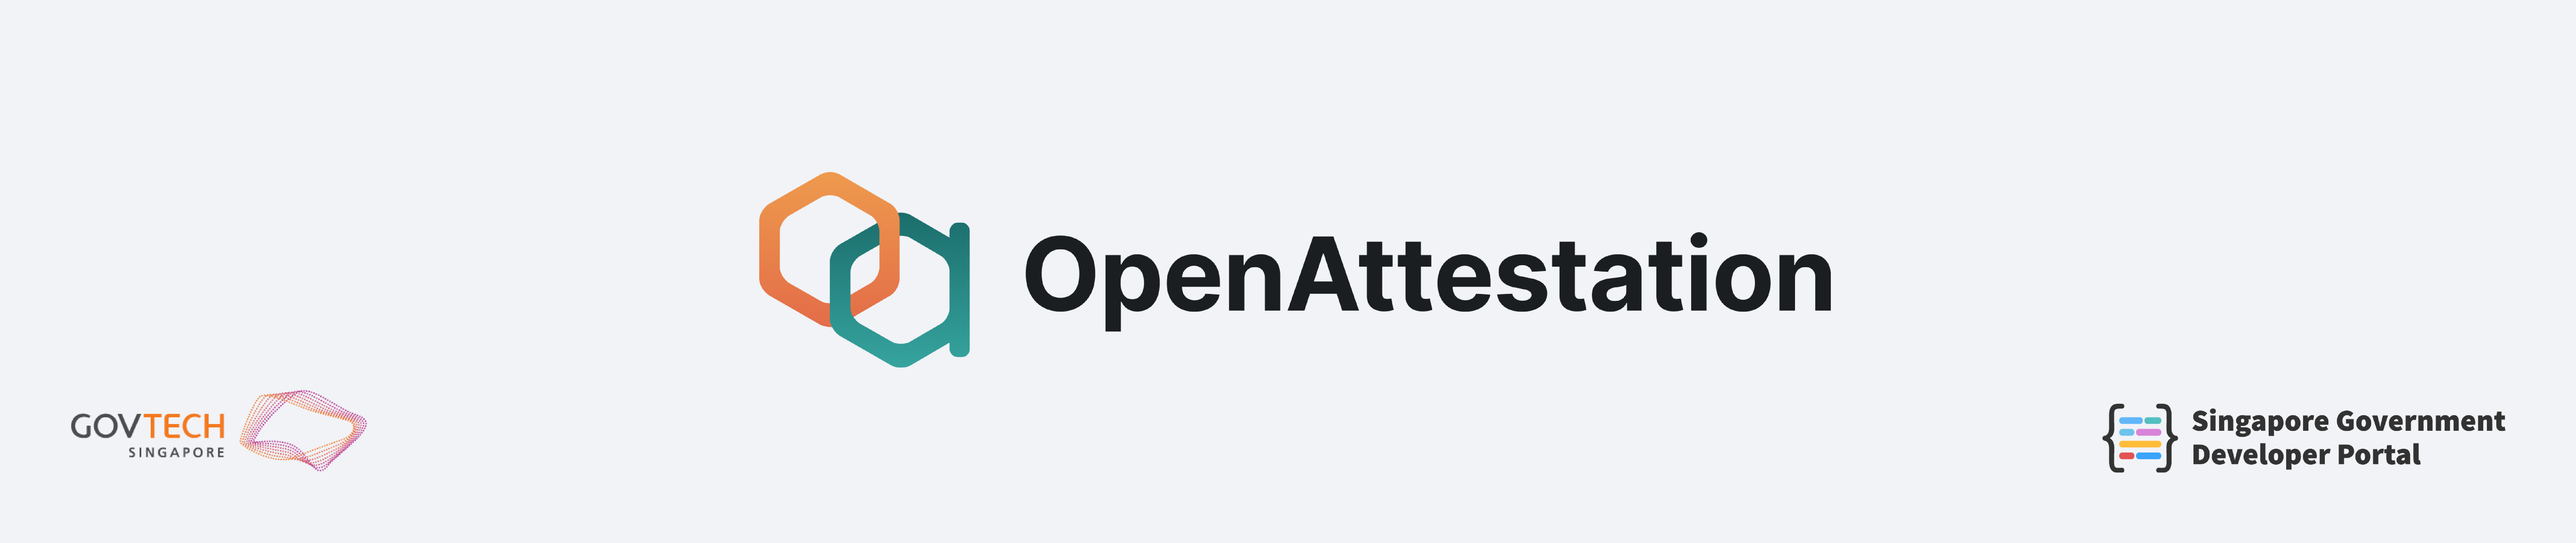 OpenAttestation header banner